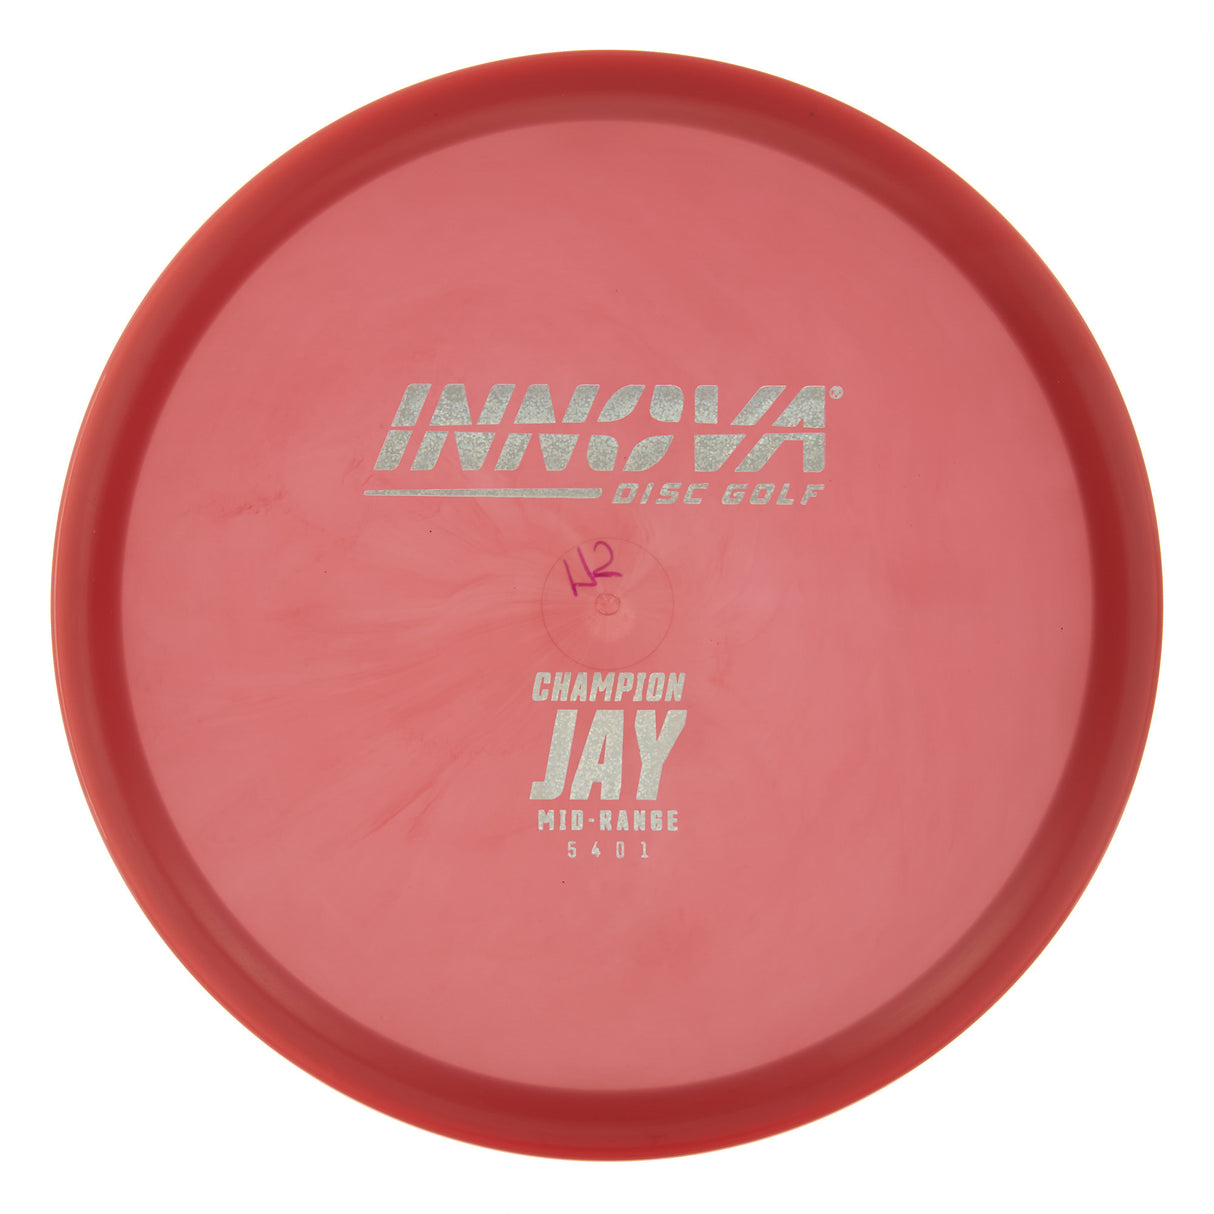 Innova Jay - Champion 176g | Style 0002